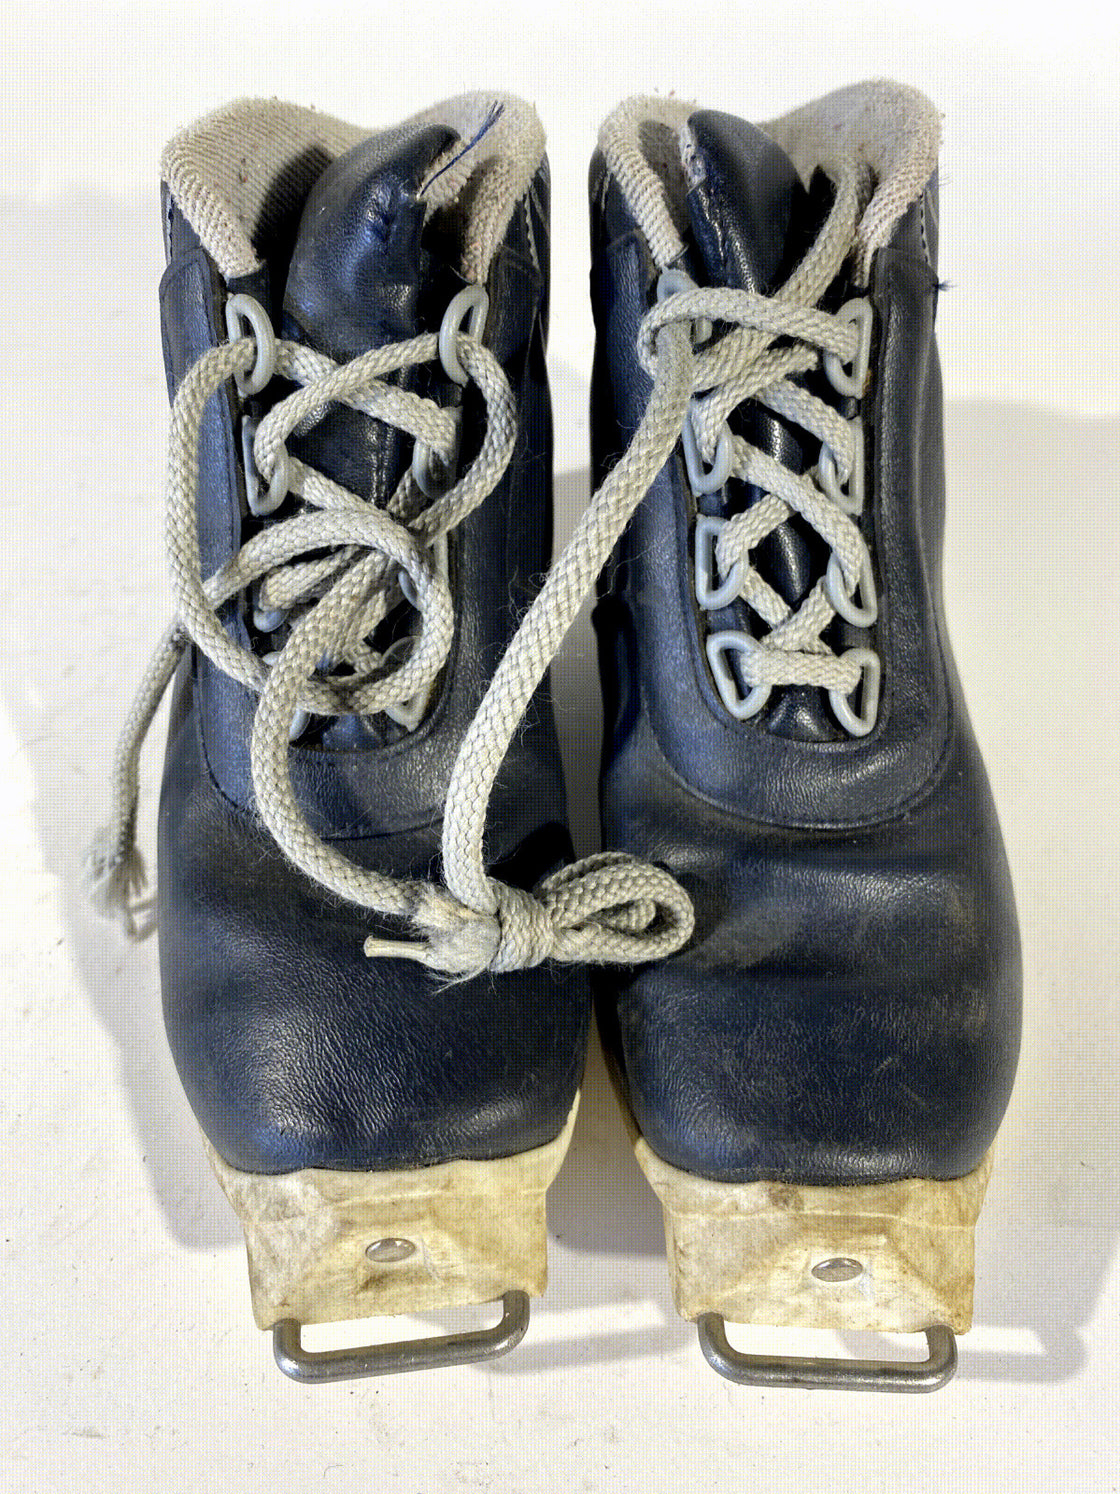 TECNO TC40 Cross Country Ski Boots Kids Size EU32 US12 for SNS Old Bindings